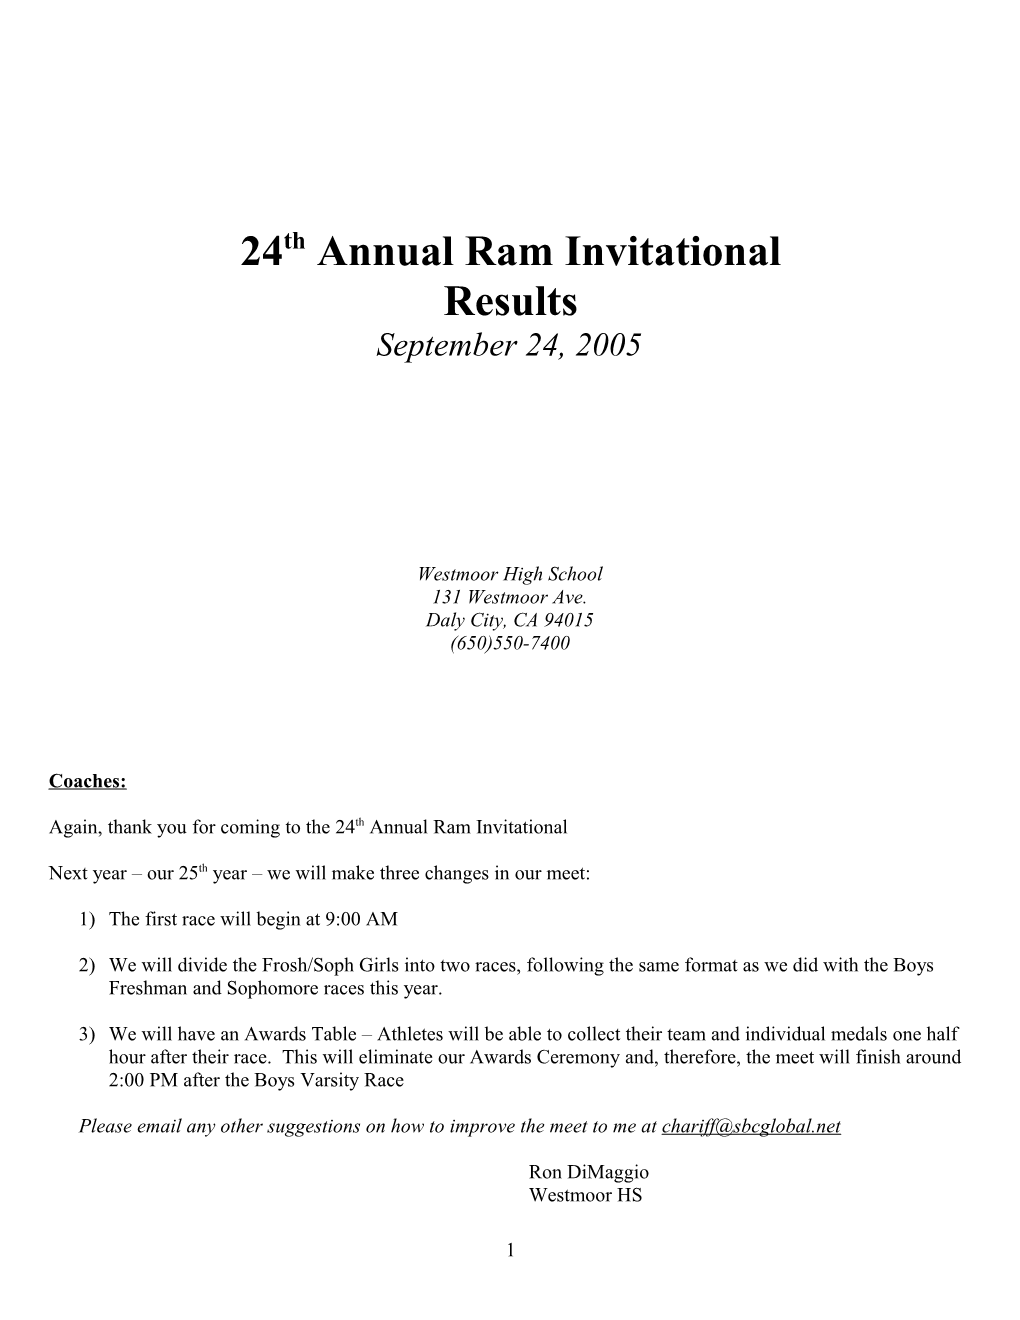 23Rd Annual Ram Invitational Results